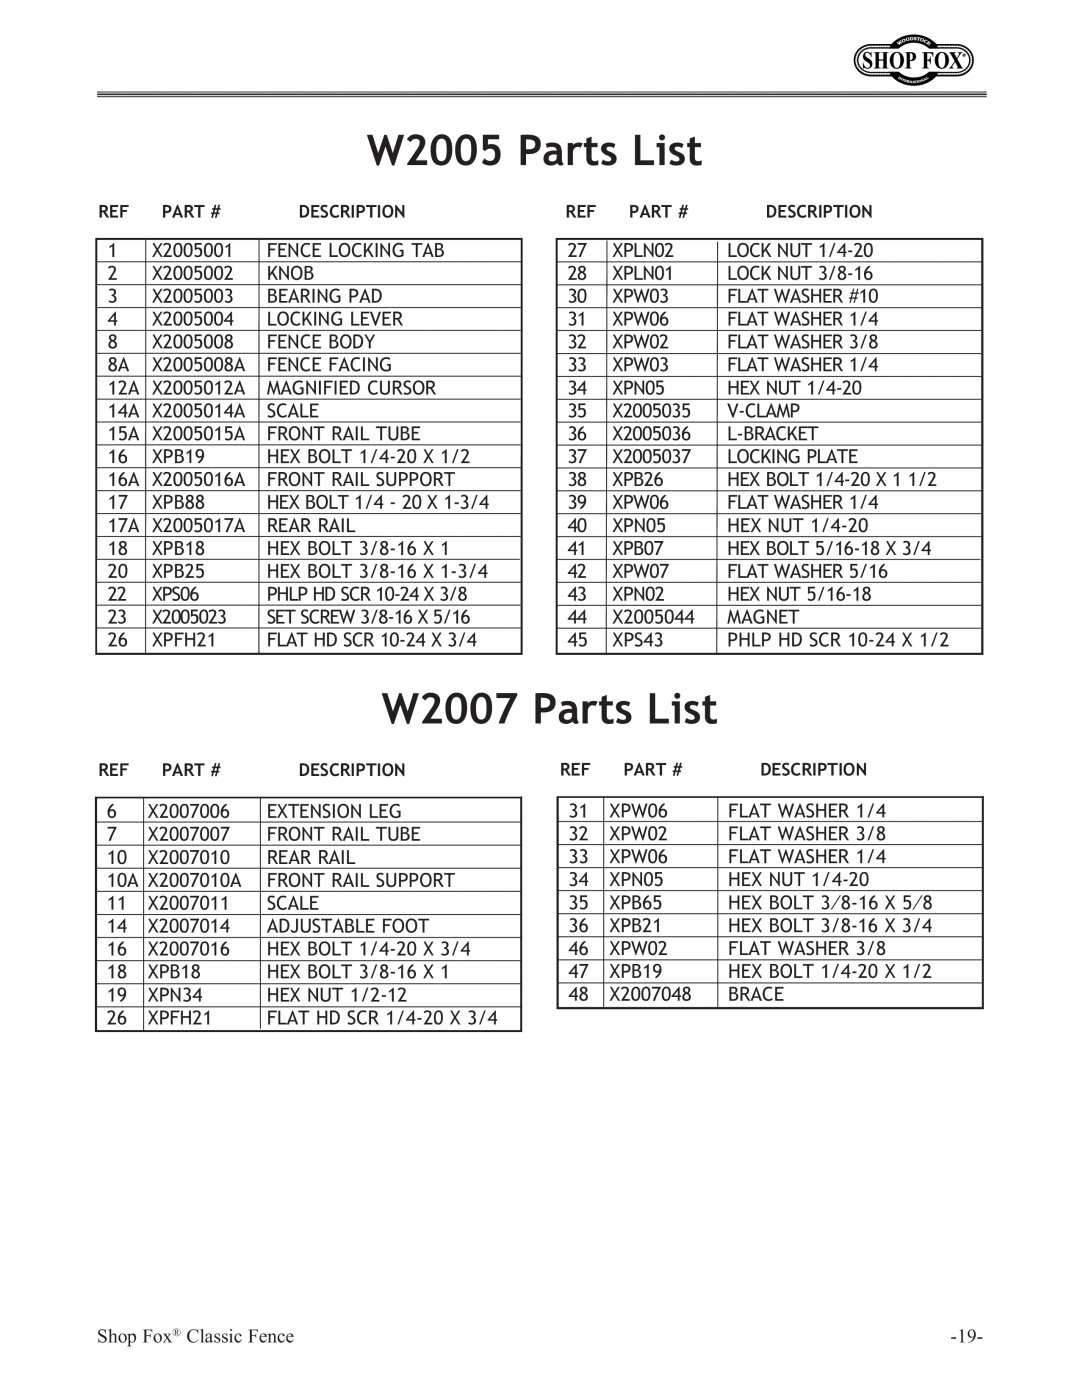 Woodstock instruction manual W2005 Parts List, W2007 Parts List 